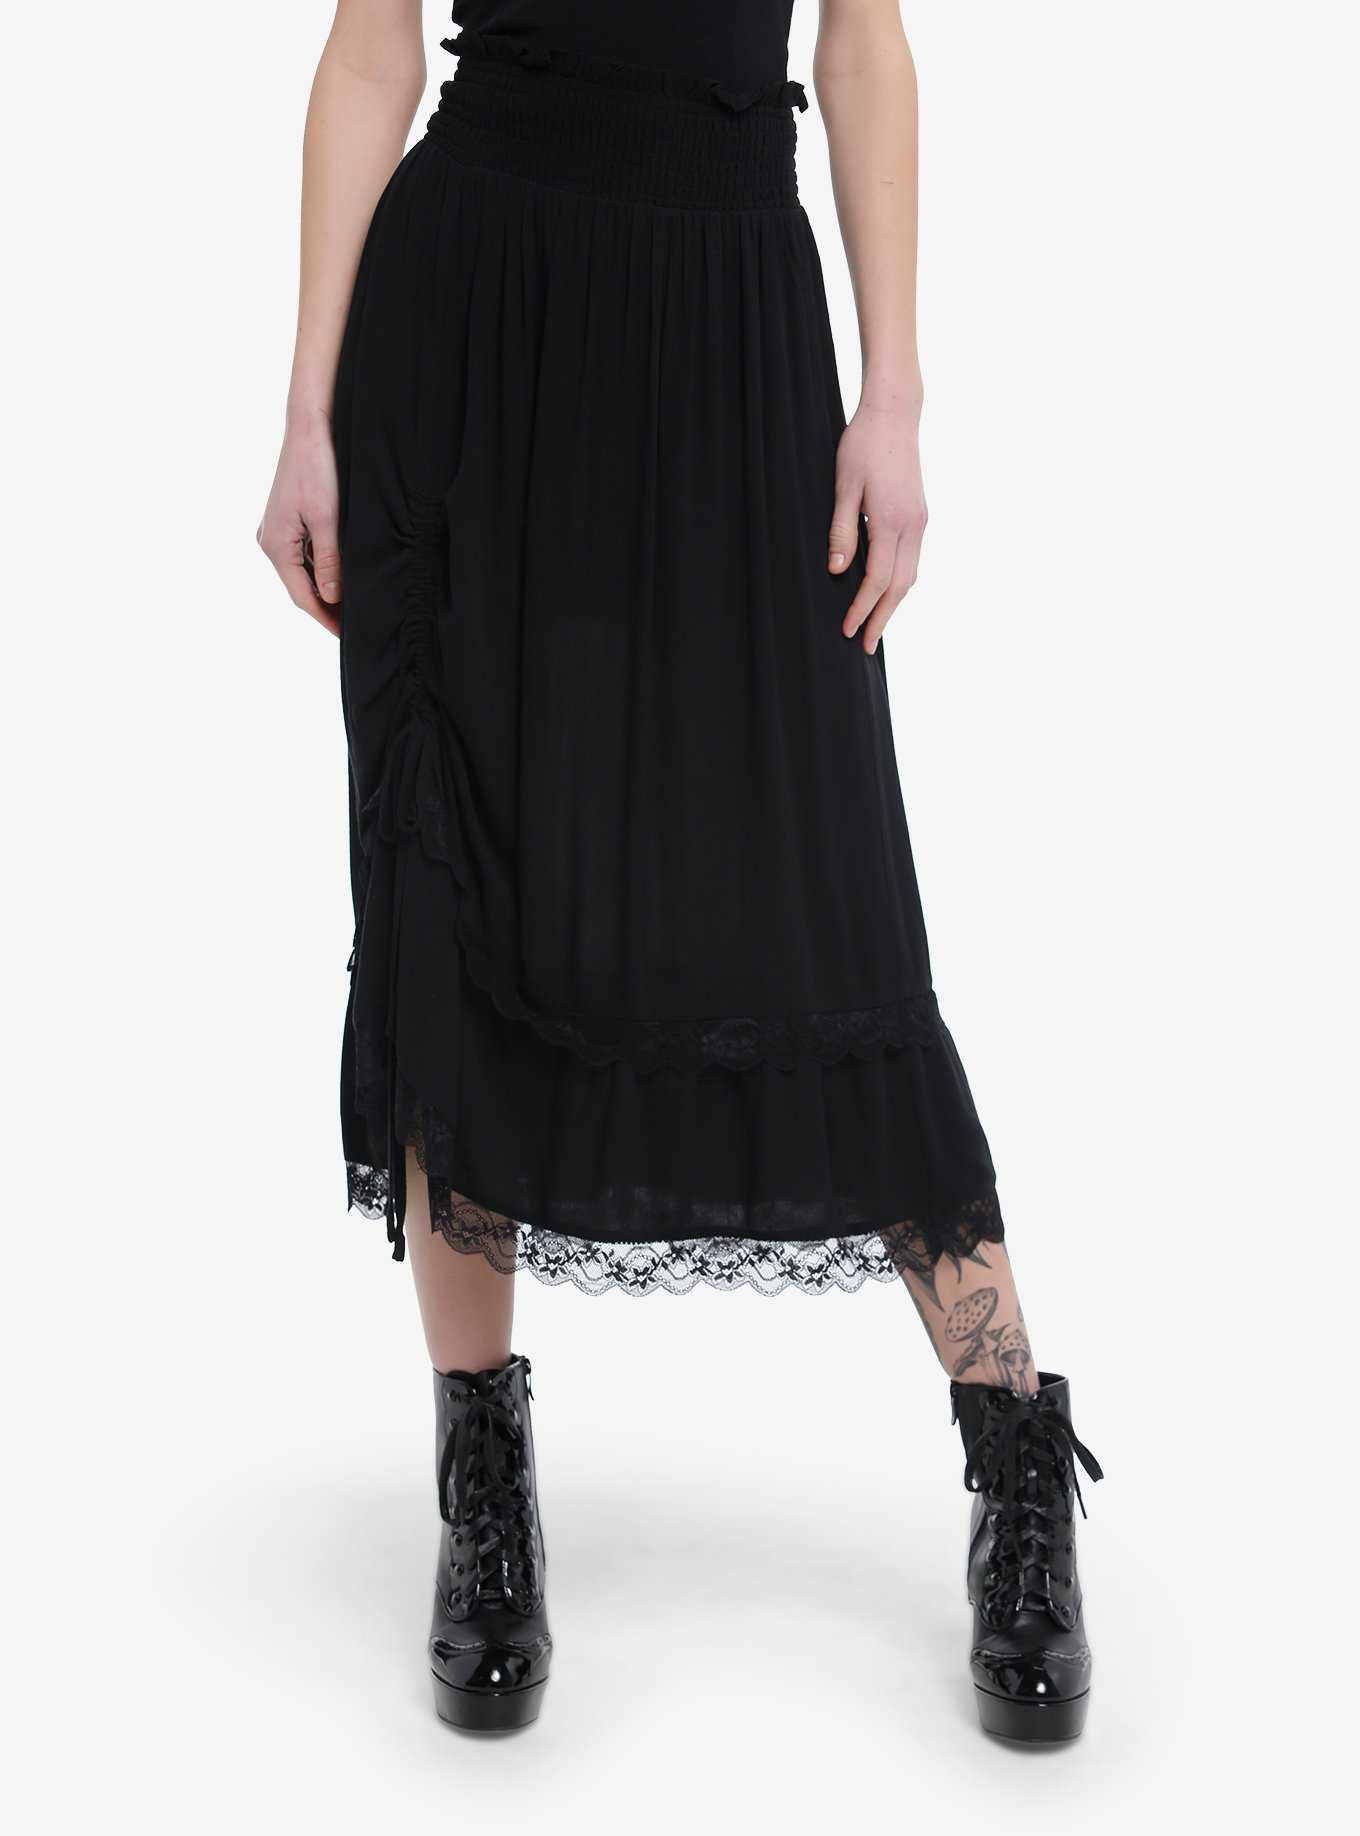 Black Lace Ruched Midi Skirt, , hi-res